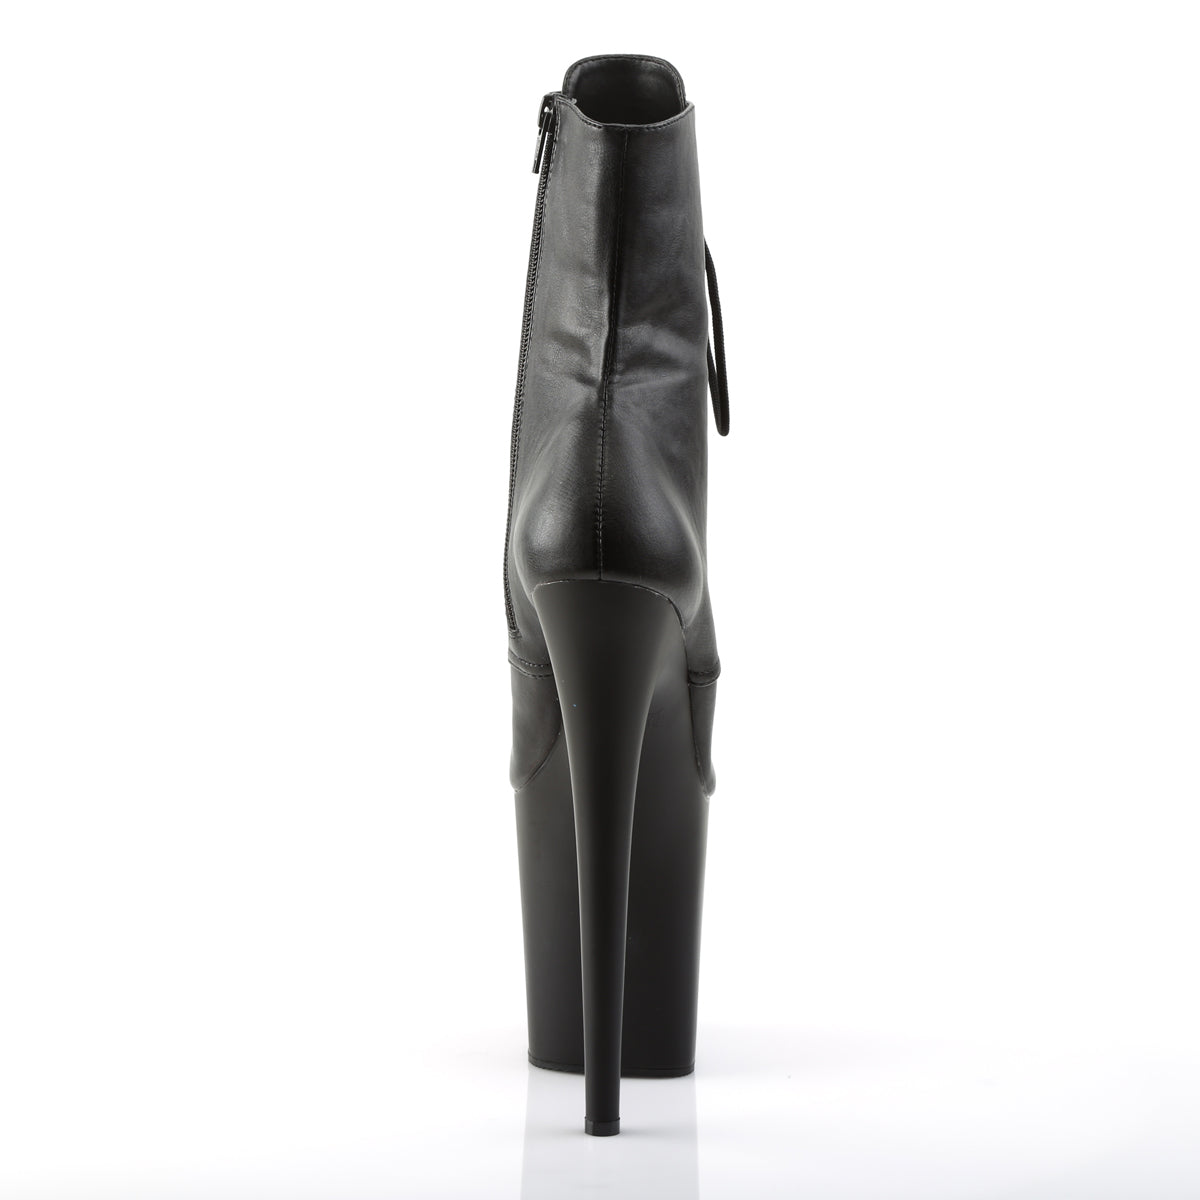 FLAMINGO-1020 Pleaser 8 Inch Heel Black Pole Dancer Platform-Pleaser- Sexy Shoes Fetish Footwear